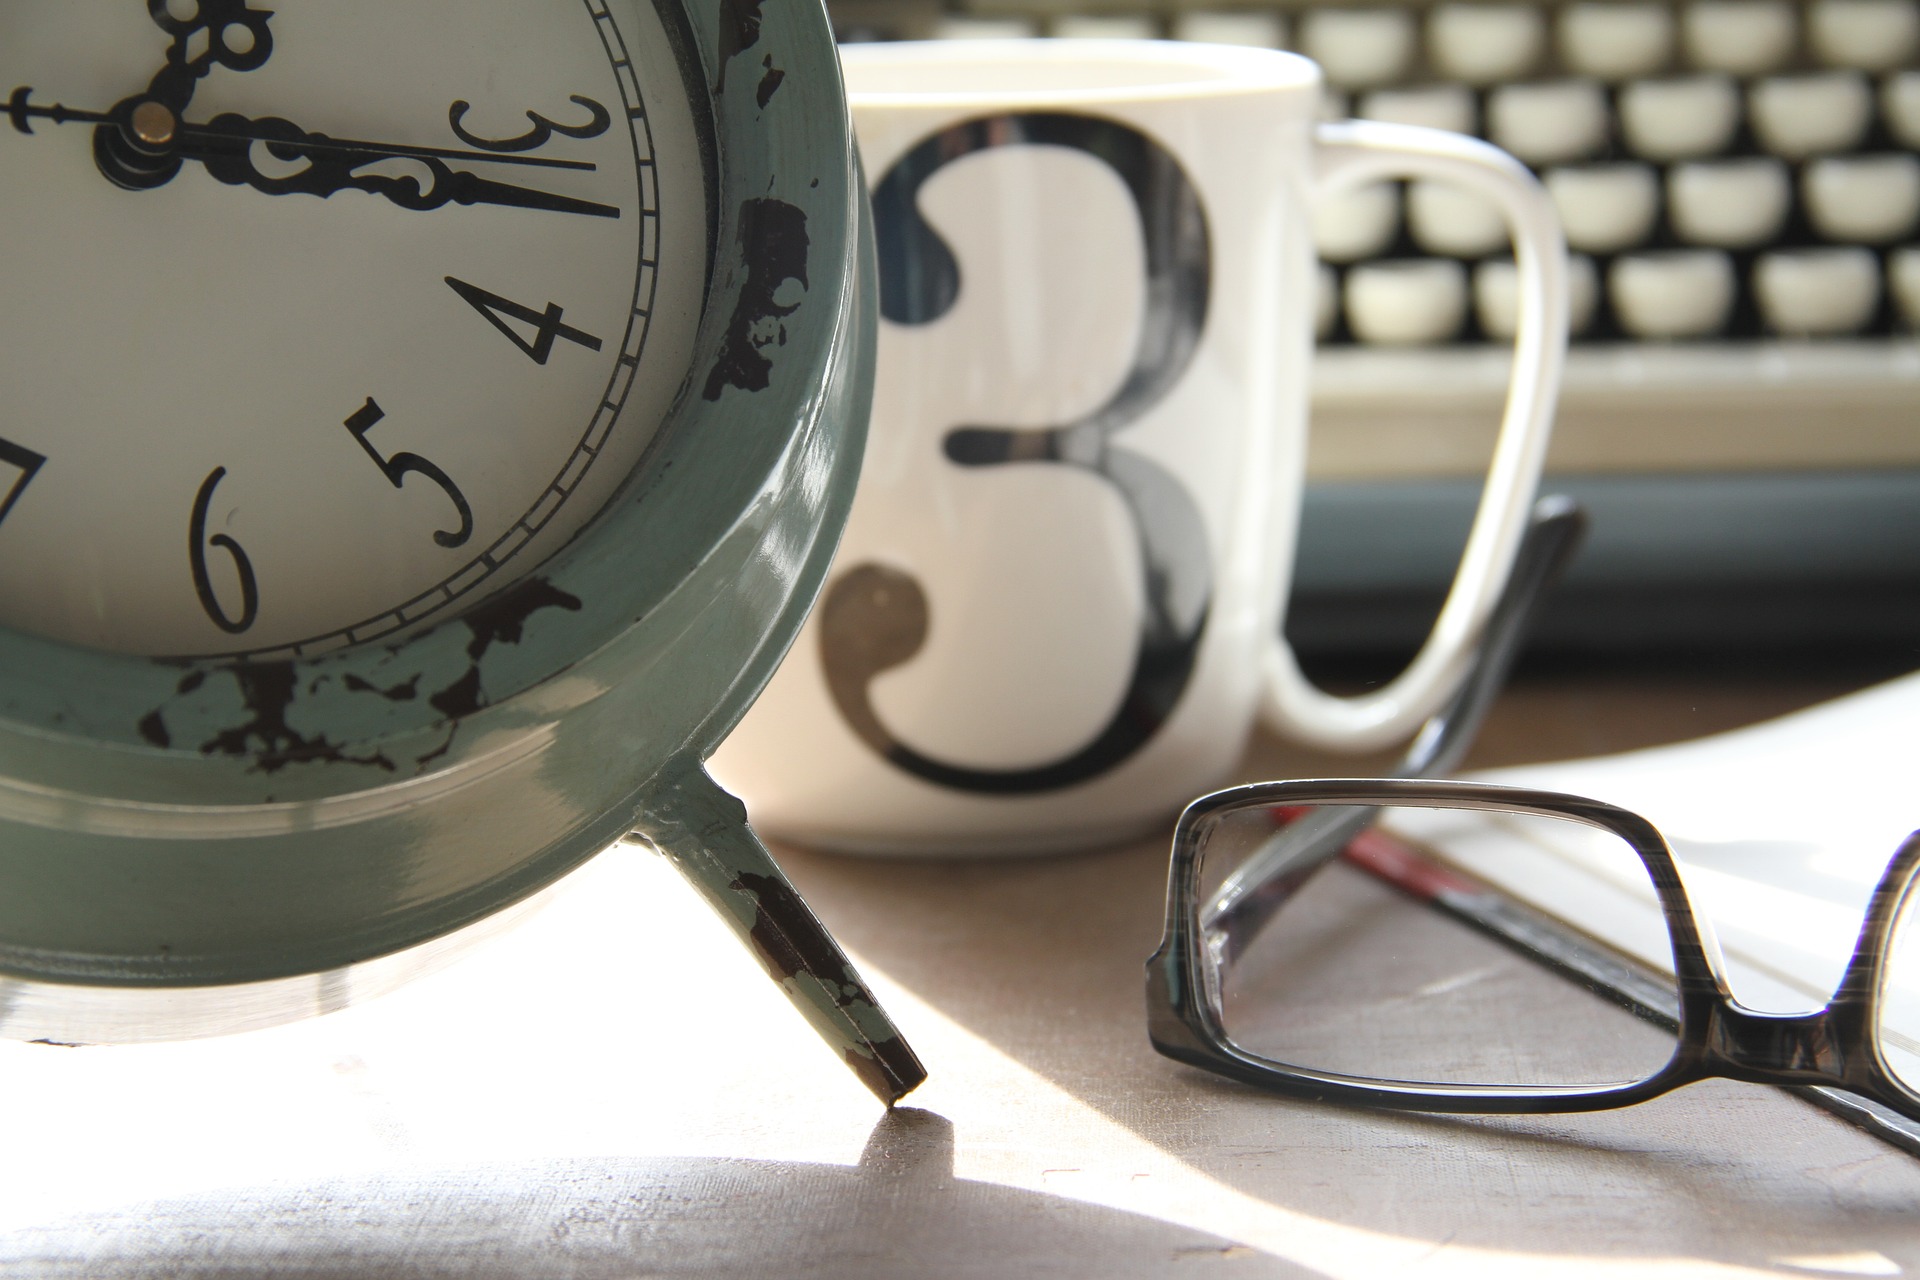 Clock mug and glasses